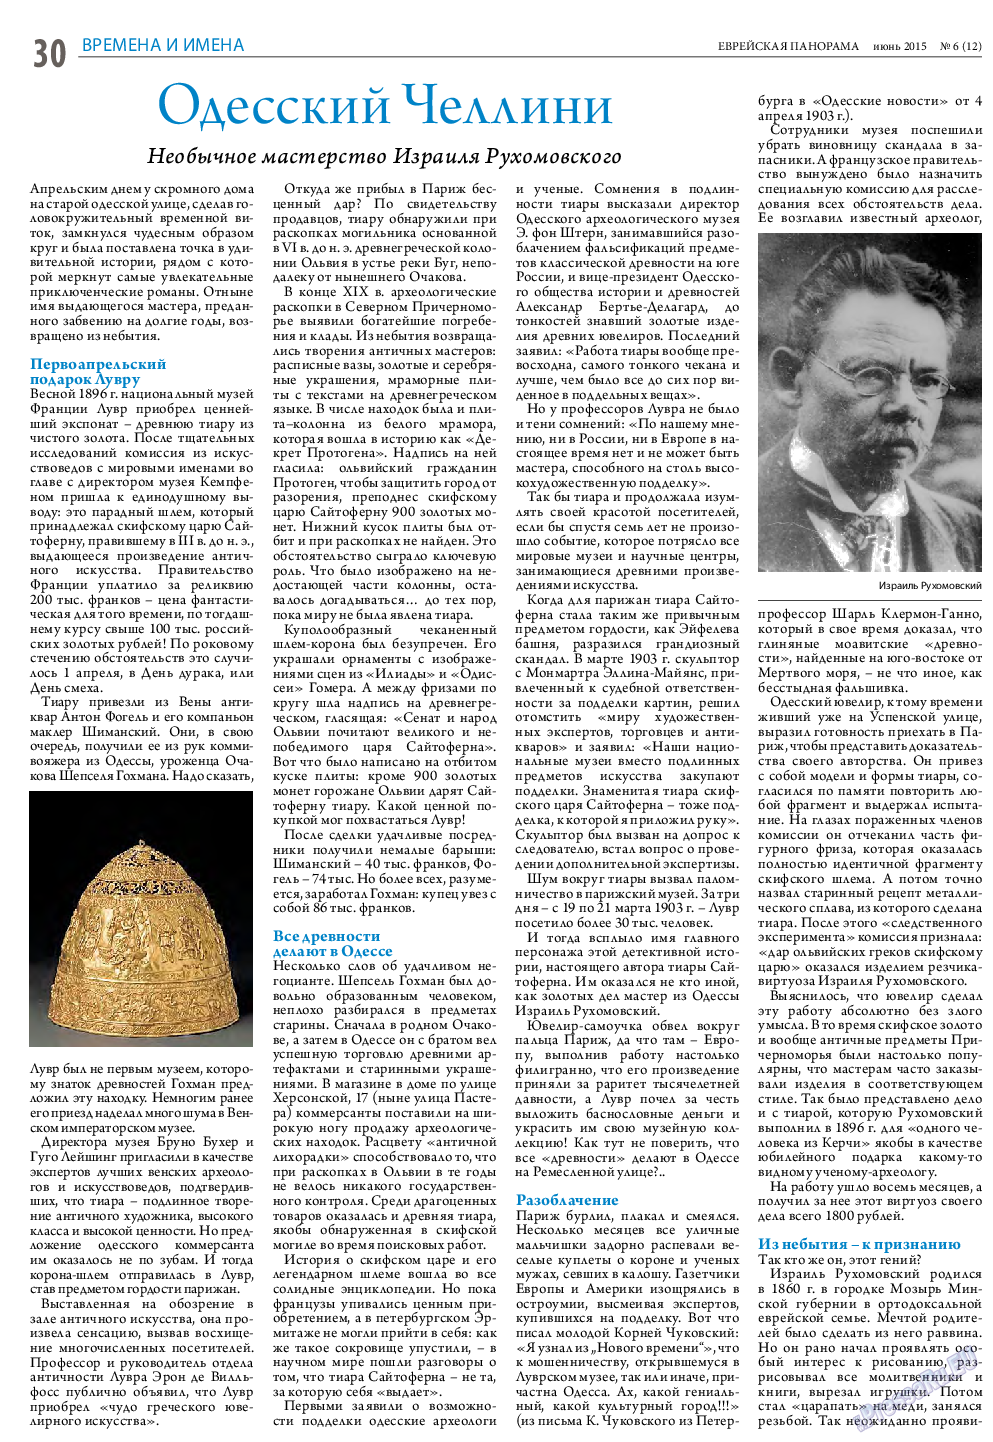 Еврейская панорама, газета. 2015 №6 стр.30